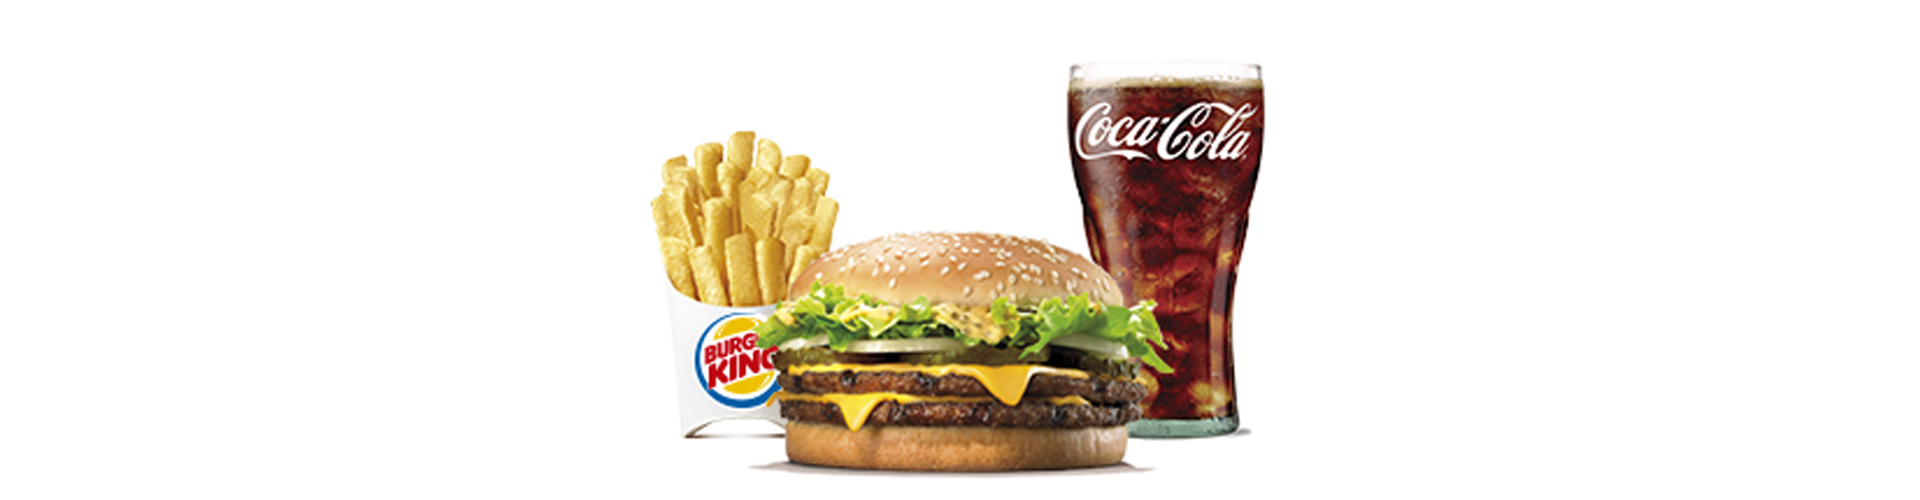 menu-big-king-burgerking-40001712-cocacola-light-aros